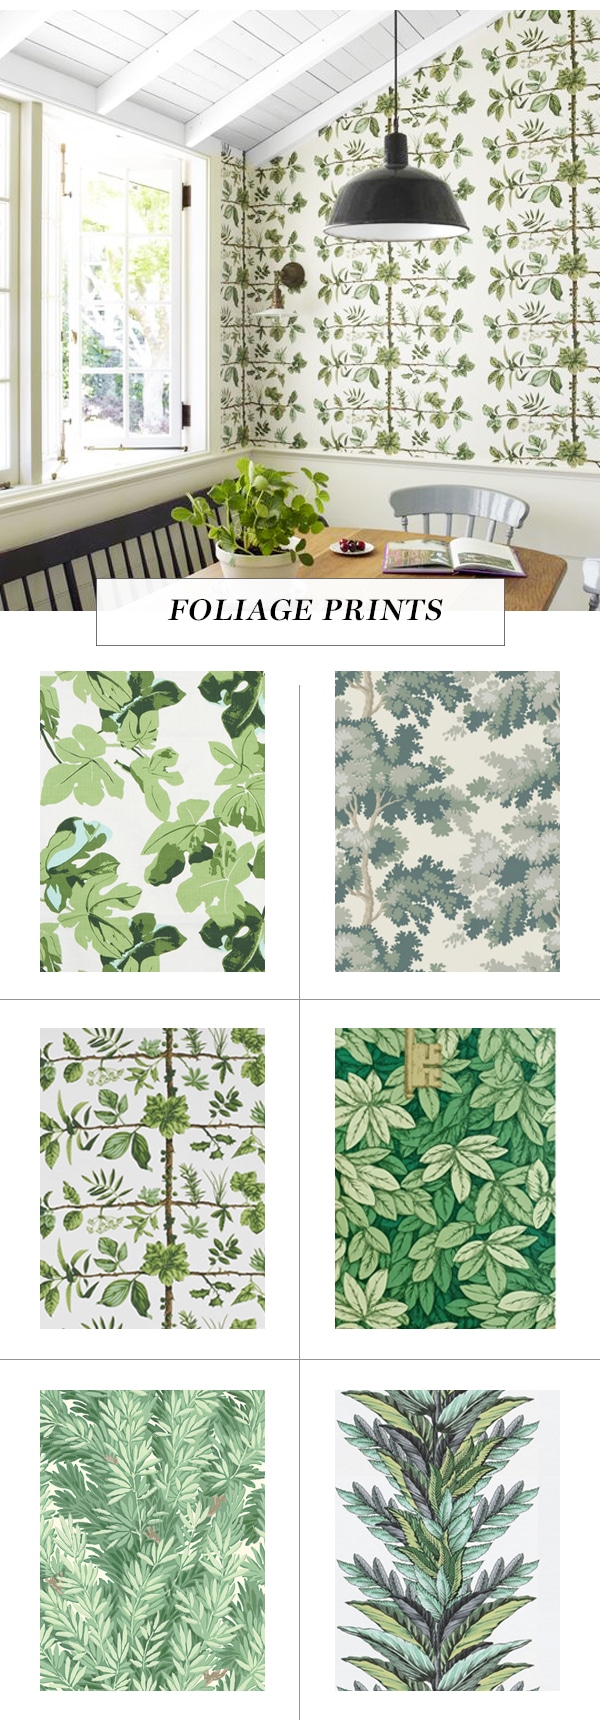 leaf print wallpaper roundup on coco kelley - foliage prints